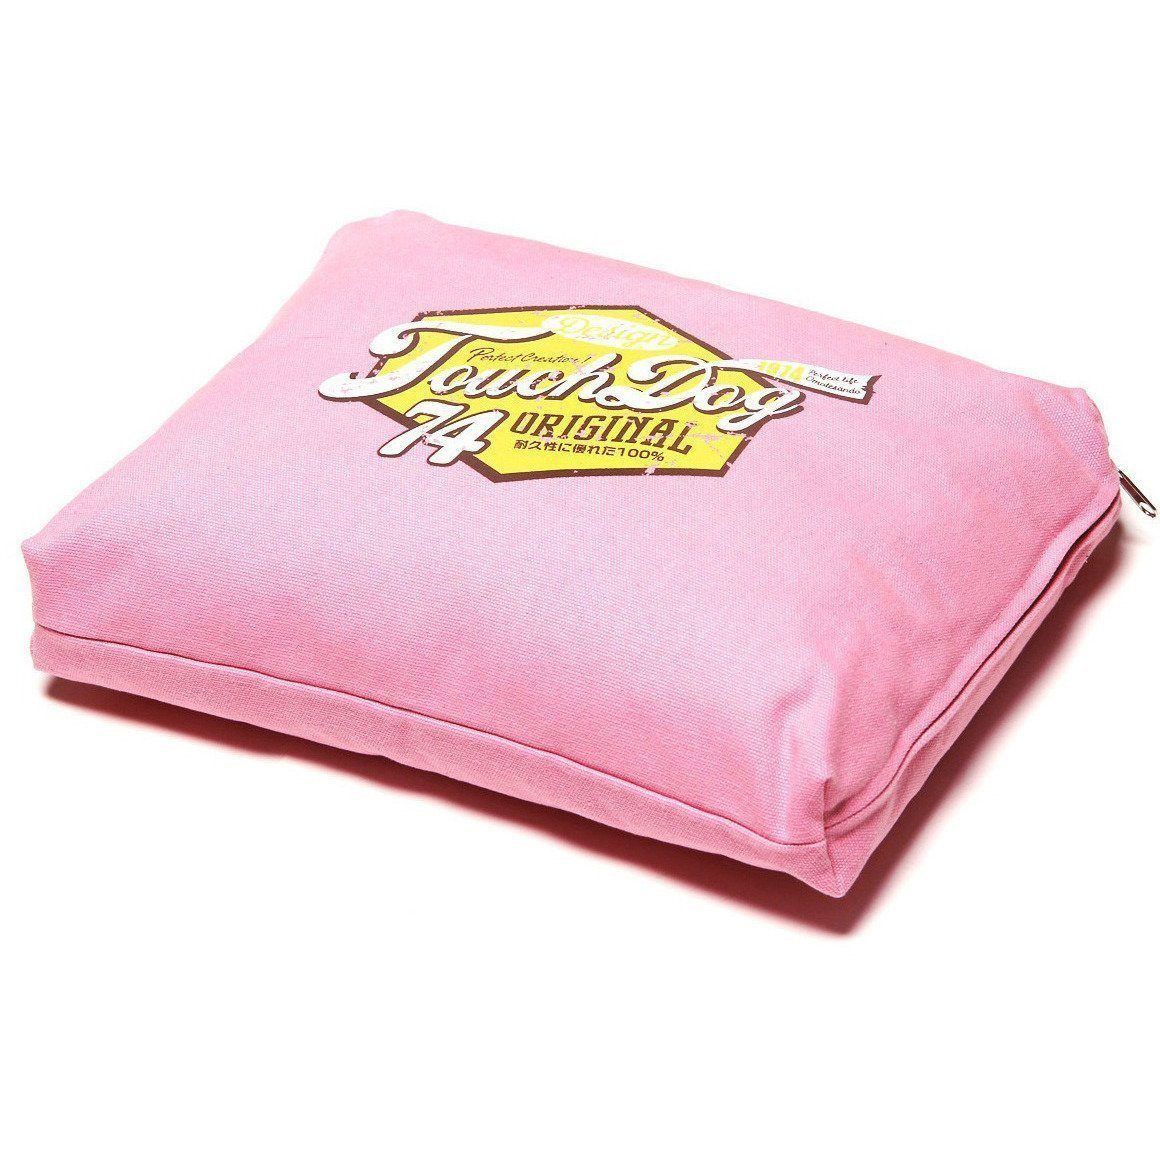 Touchdog ® 'Rose-Pedal' Premium Designer Rectangular Dog Bed Large Sky Blue, Bubblegum Pink